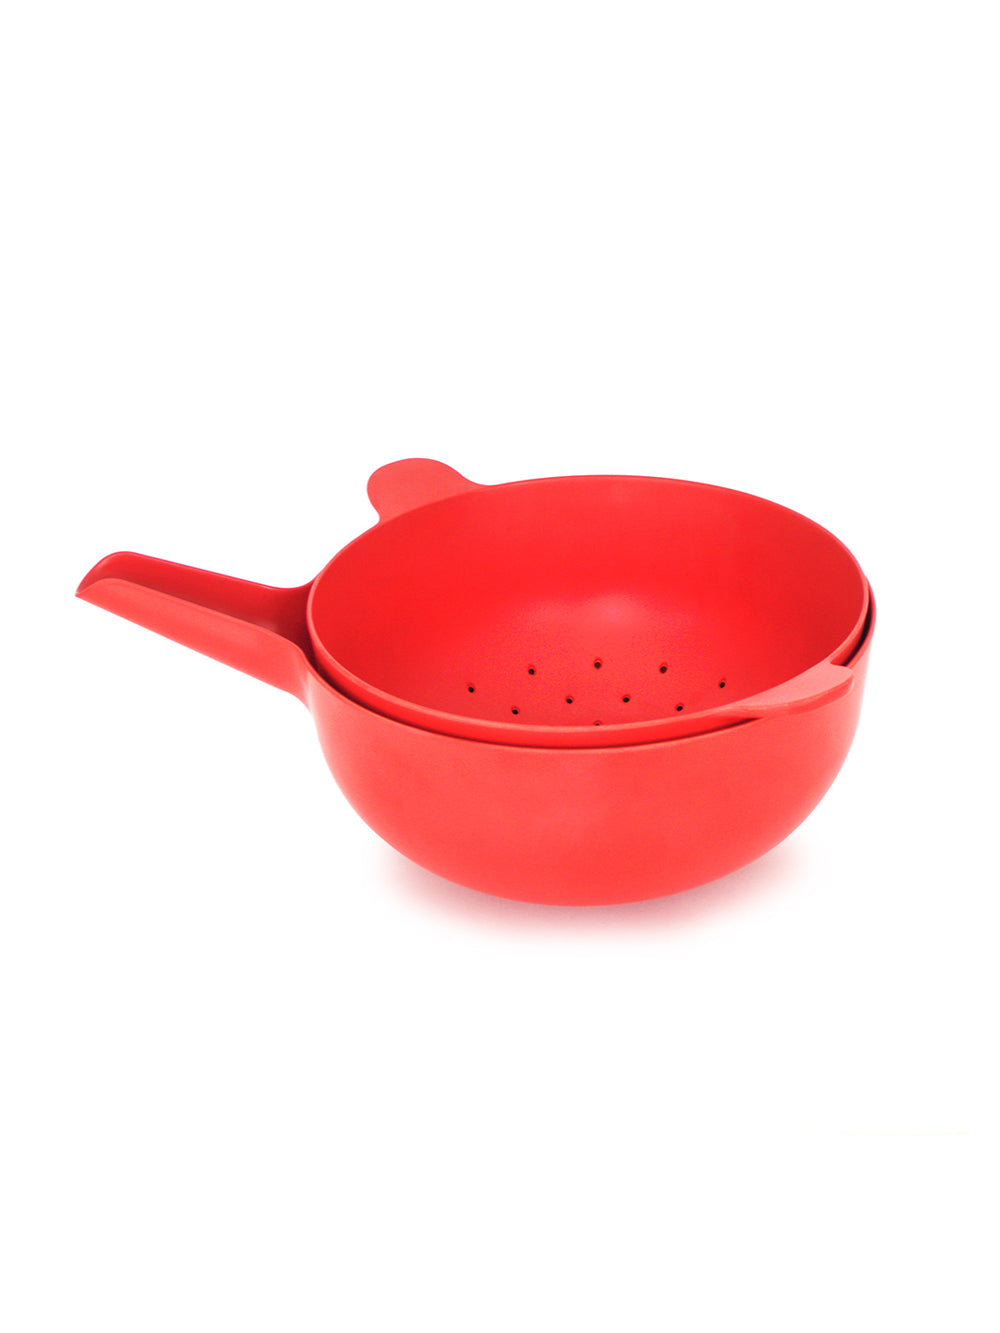 https://cdn.shopify.com/s/files/1/2404/0687/products/ekobo_68692_pronto-large-mixing-bowl-colander-set_tomato.jpg?v=1642185776&width=1000